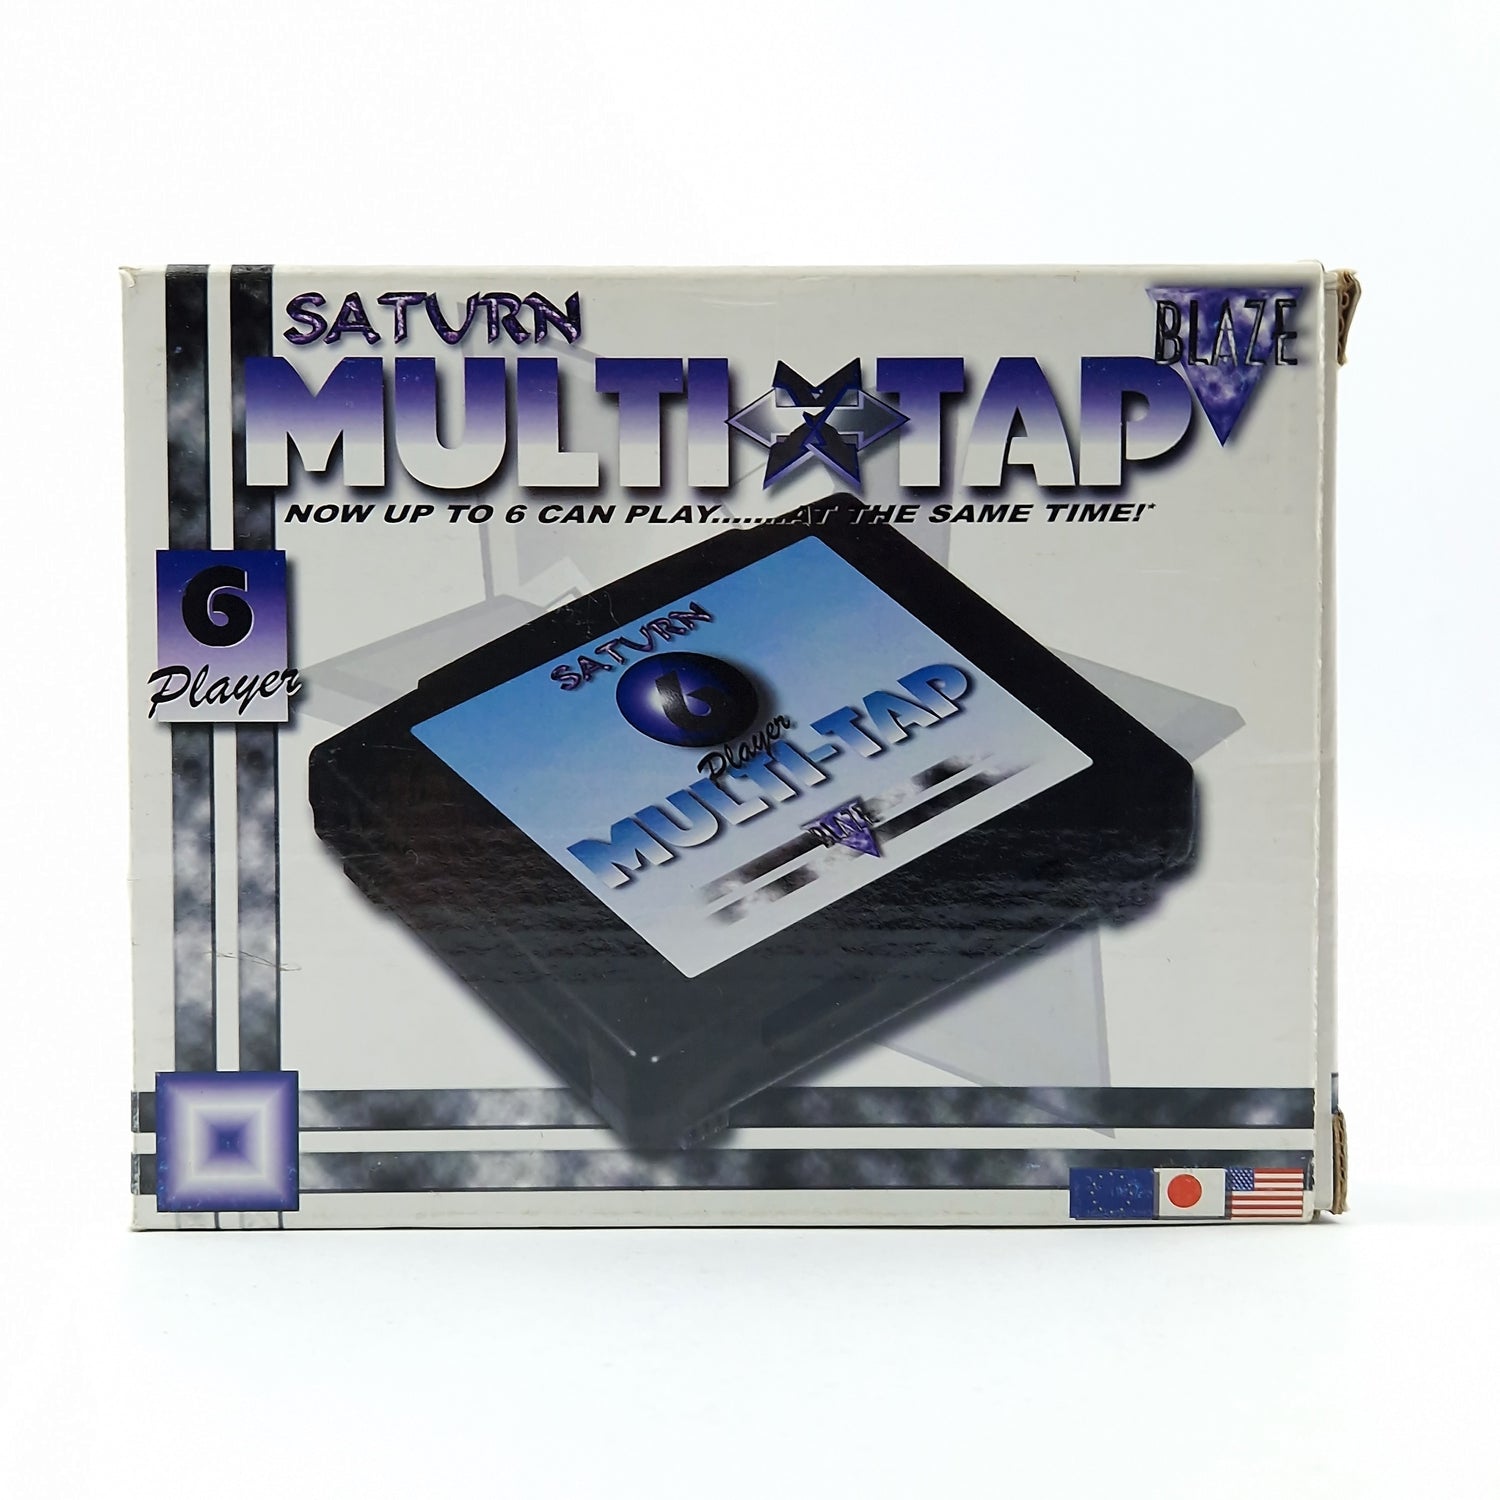 Sega Saturn Accessories: 6 Player Multi-Tap Adapter - Region free from BLAZE in original packaging